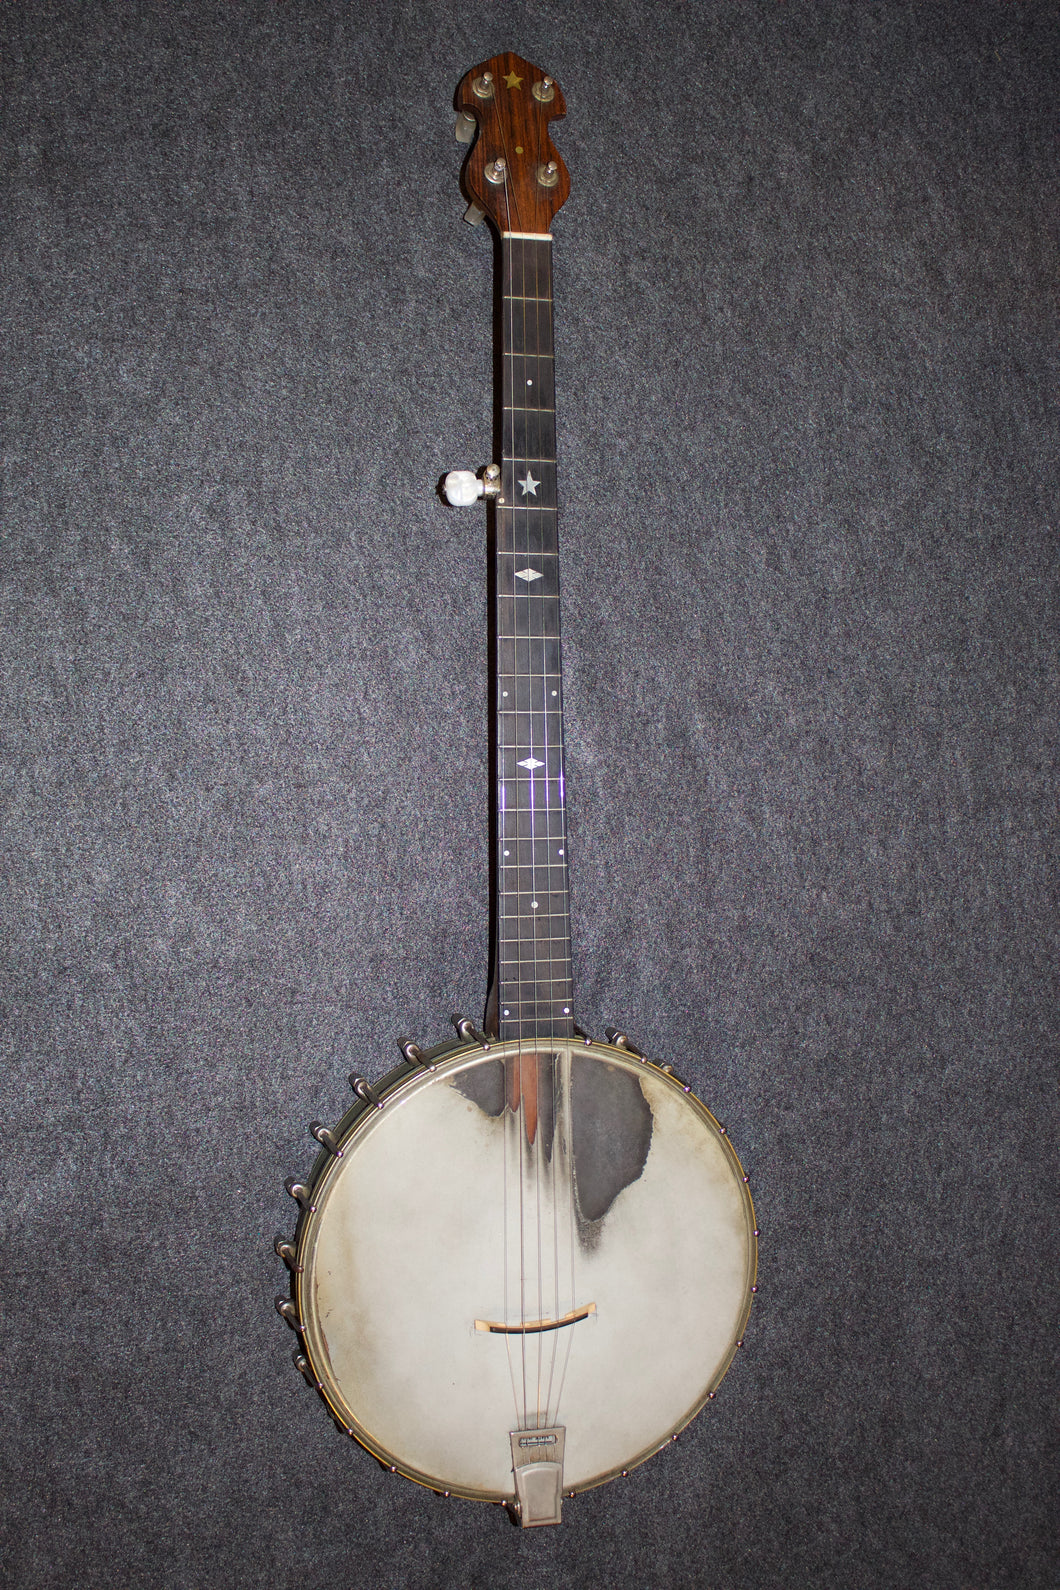 DeWick 5-String Banjo c. 1920s